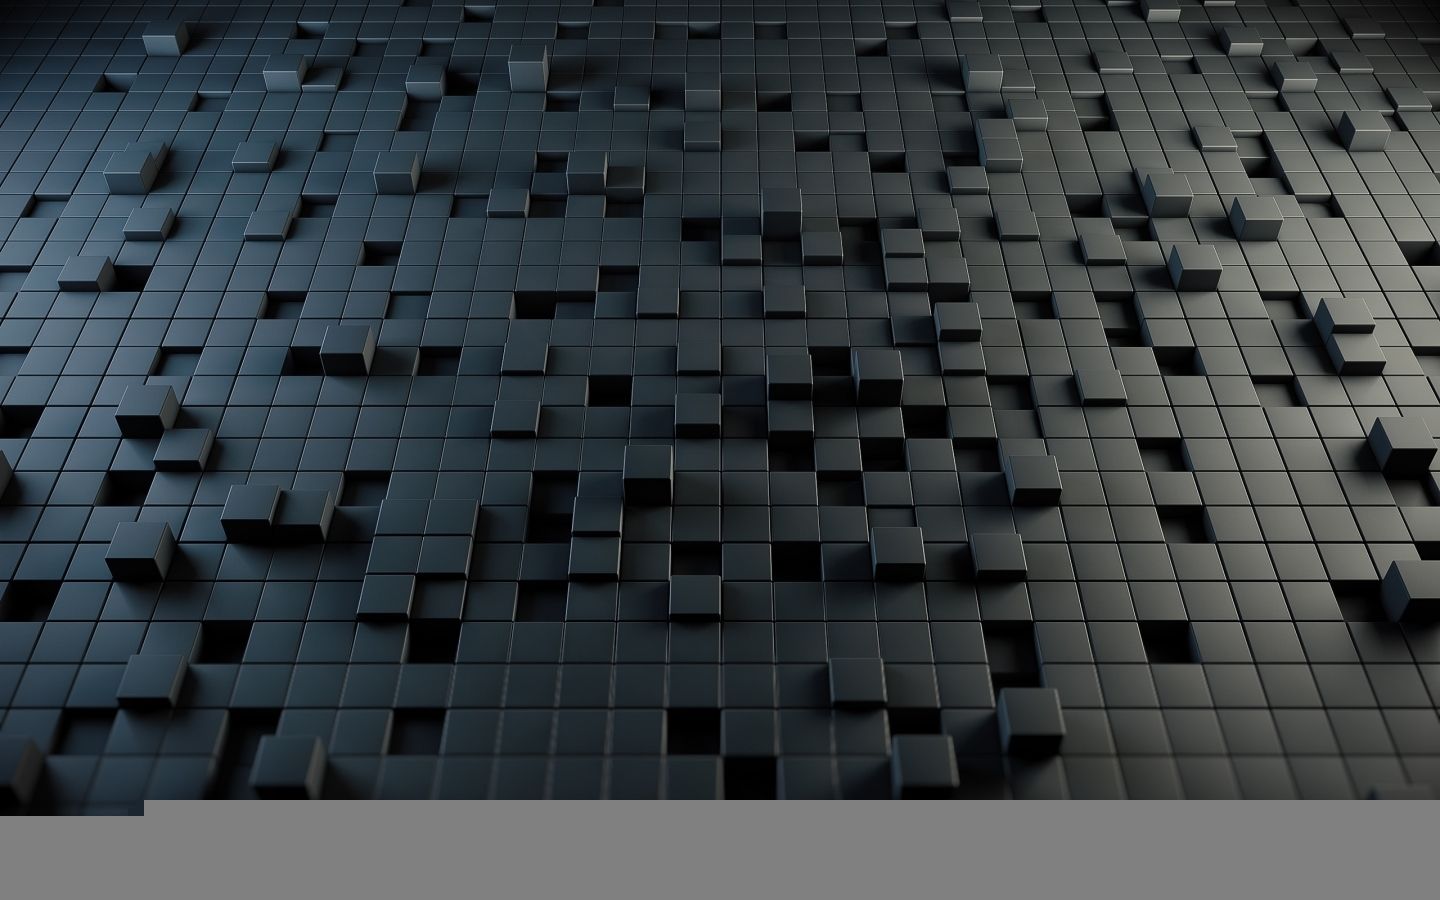 Cubes 3D Mac Wallpaper Download | Free Mac Wallpapers Download